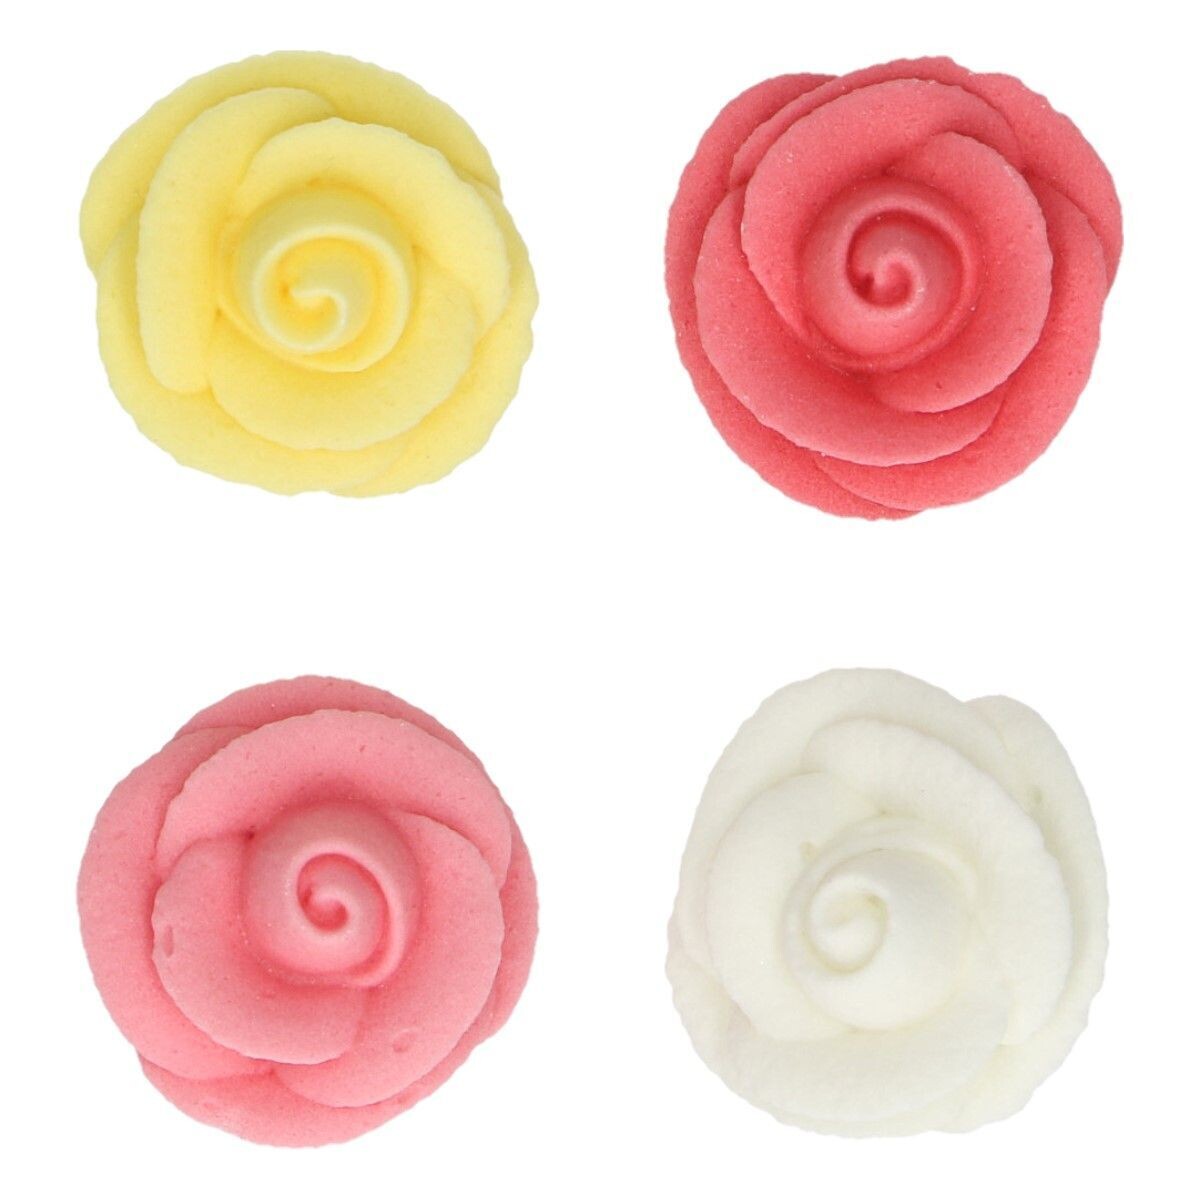 FunCakes Sugar Decorations -ROSES 8 τμχ - Βρώσιμα Ζαχαρωτά Τριαντάφυλλα